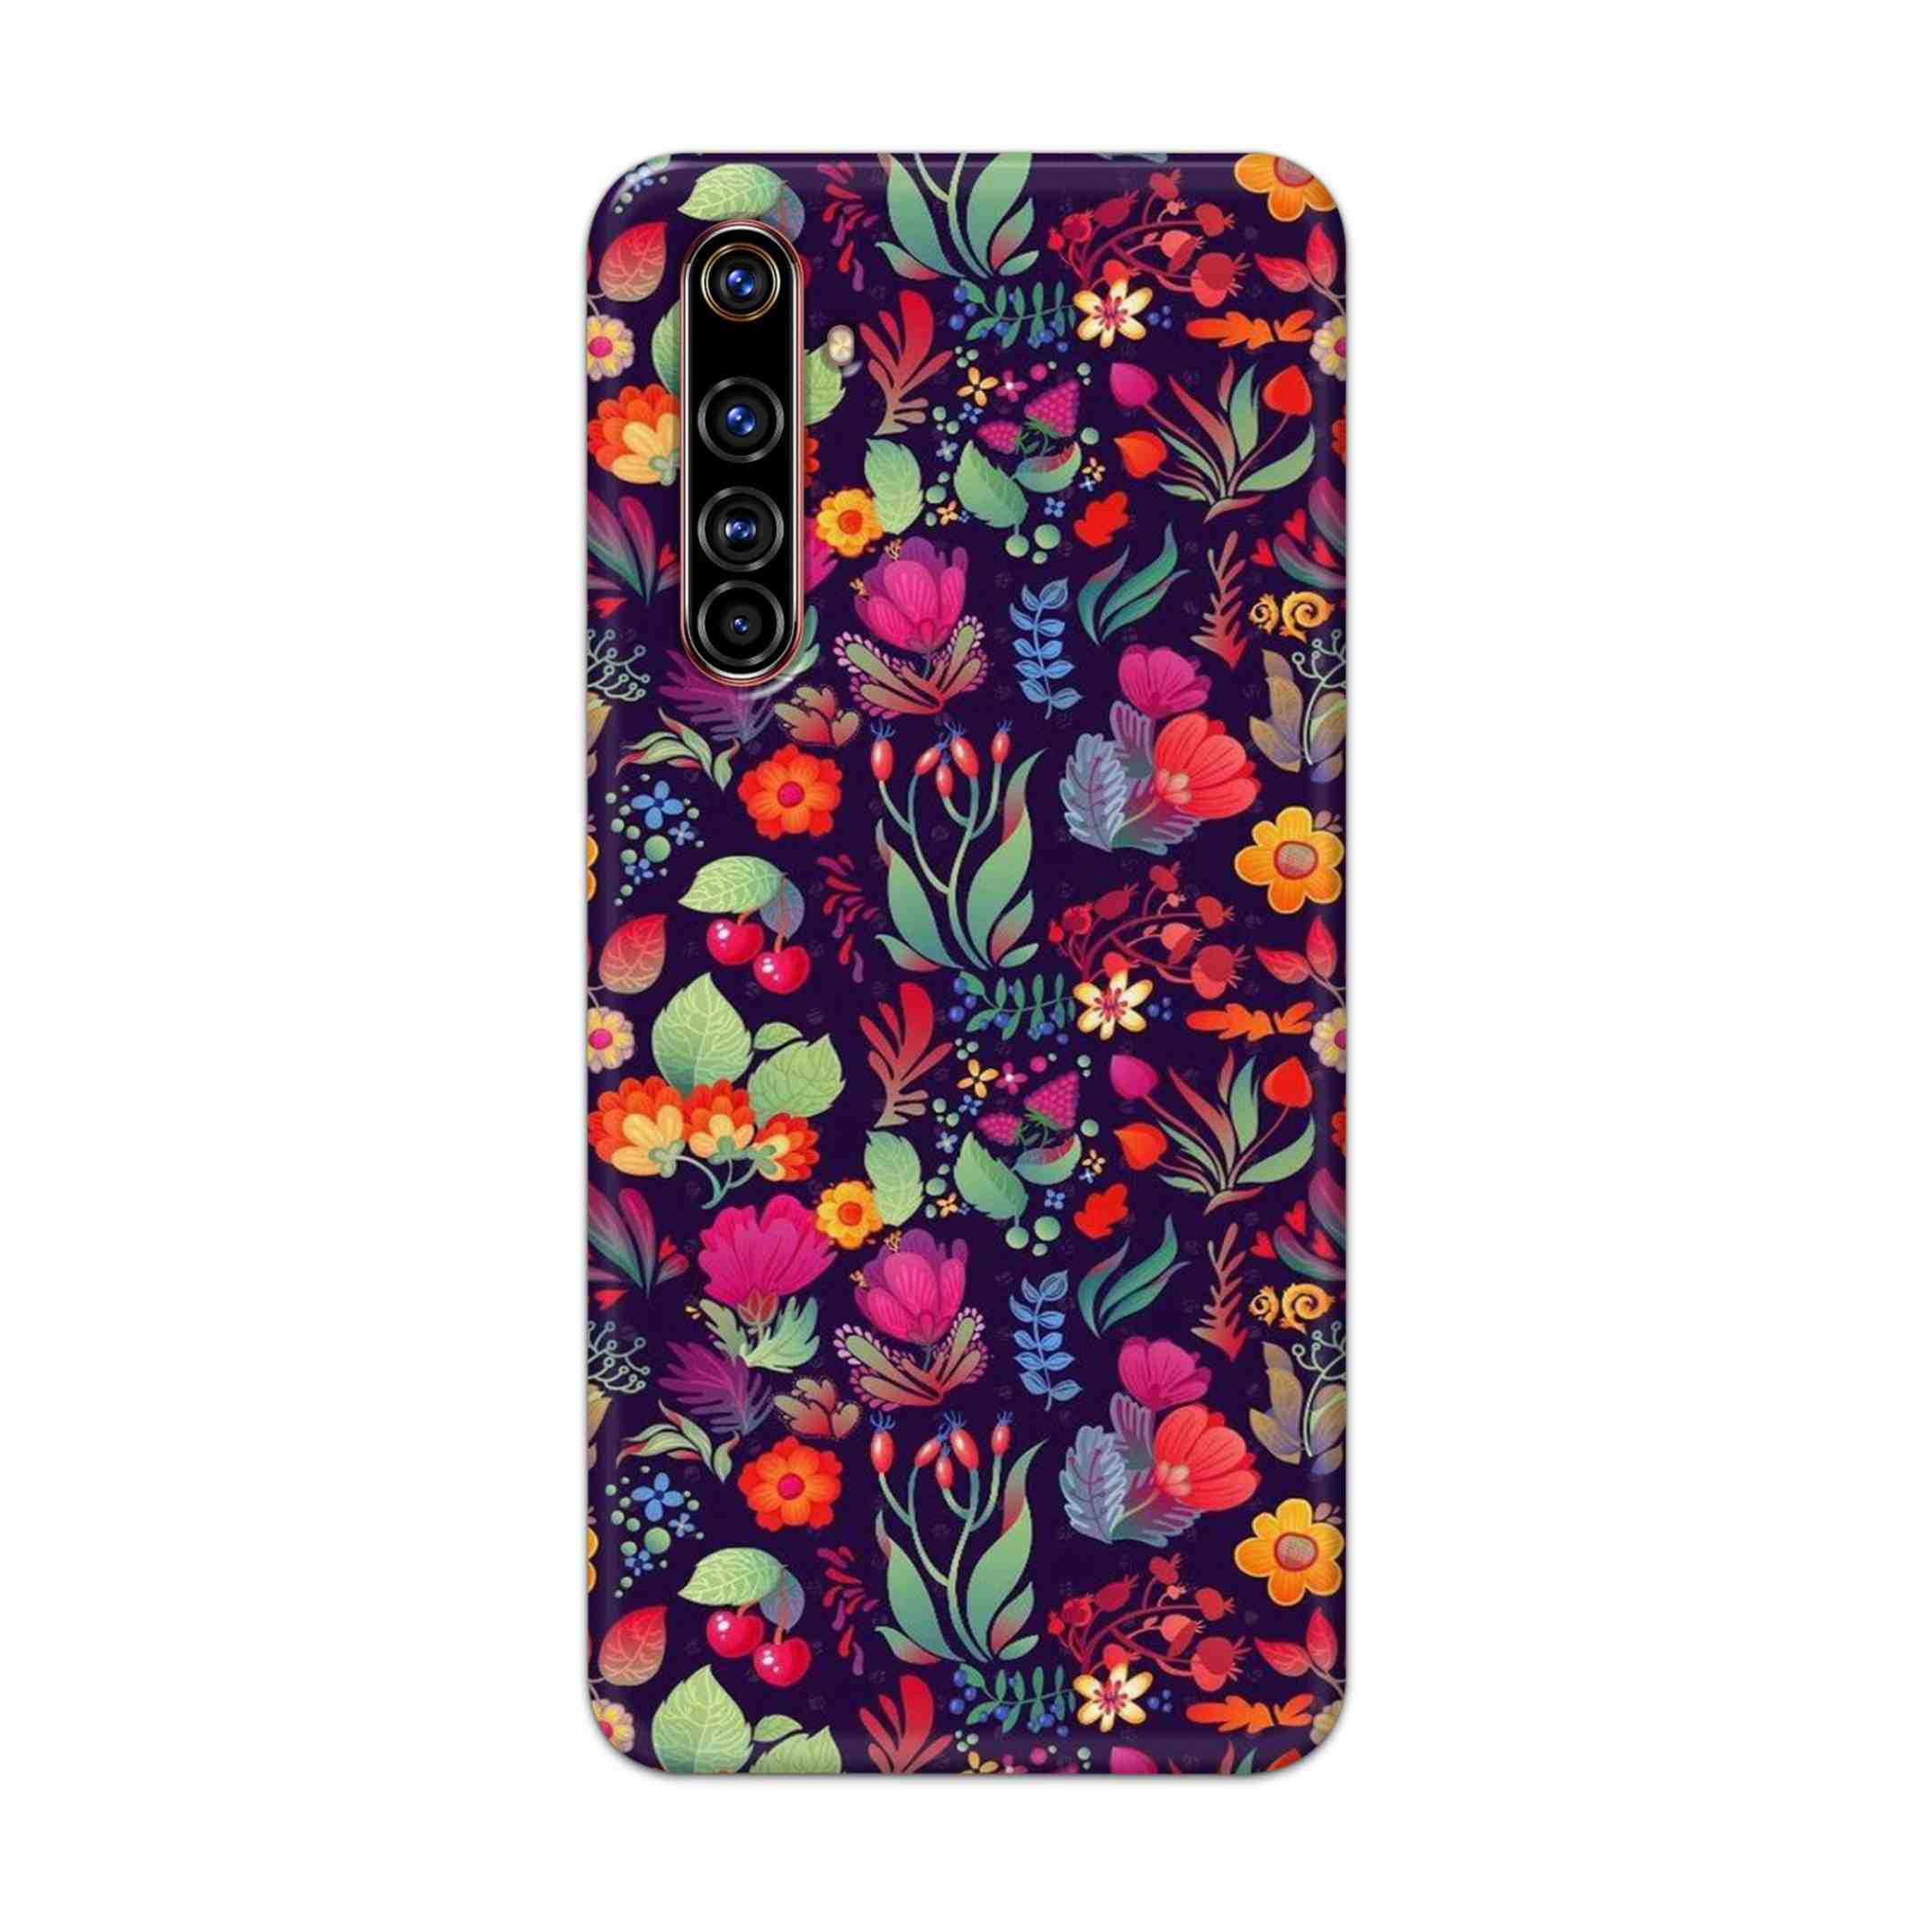 Buy Fruits Flower Hard Back Mobile Phone Case Cover For Realme X50 Pro Online